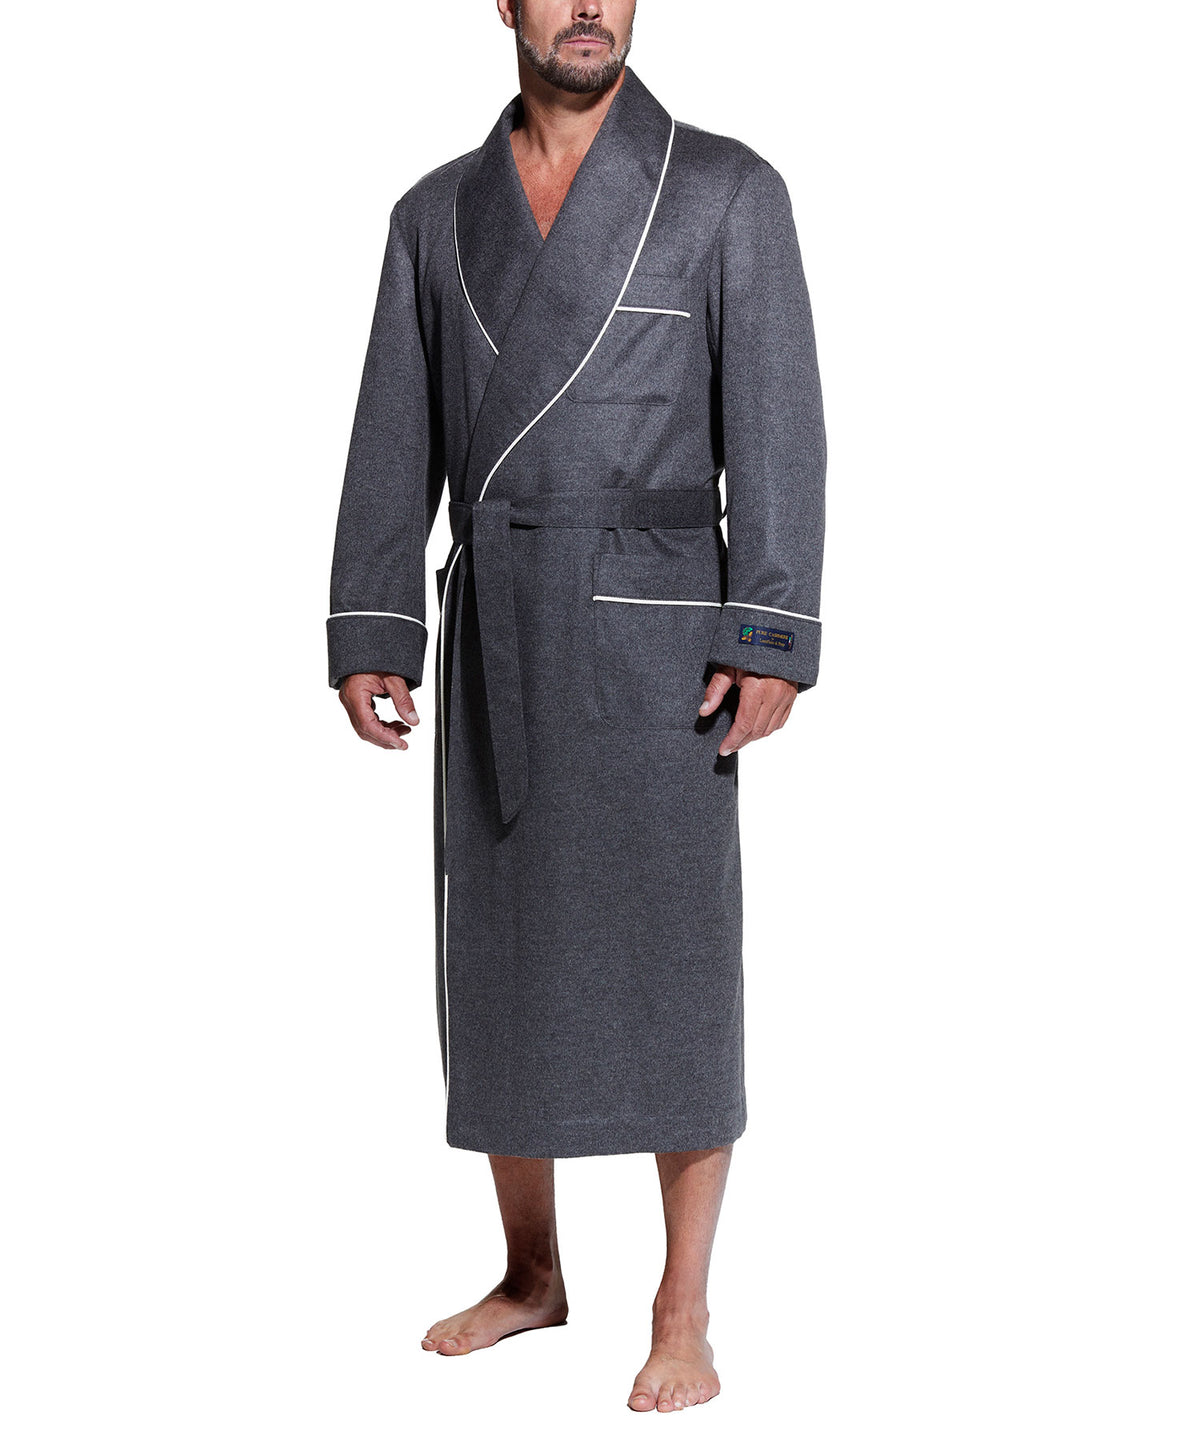 Westport Black Made-to-Order Customizable Cashmere Shawl Robe, Big & Tall